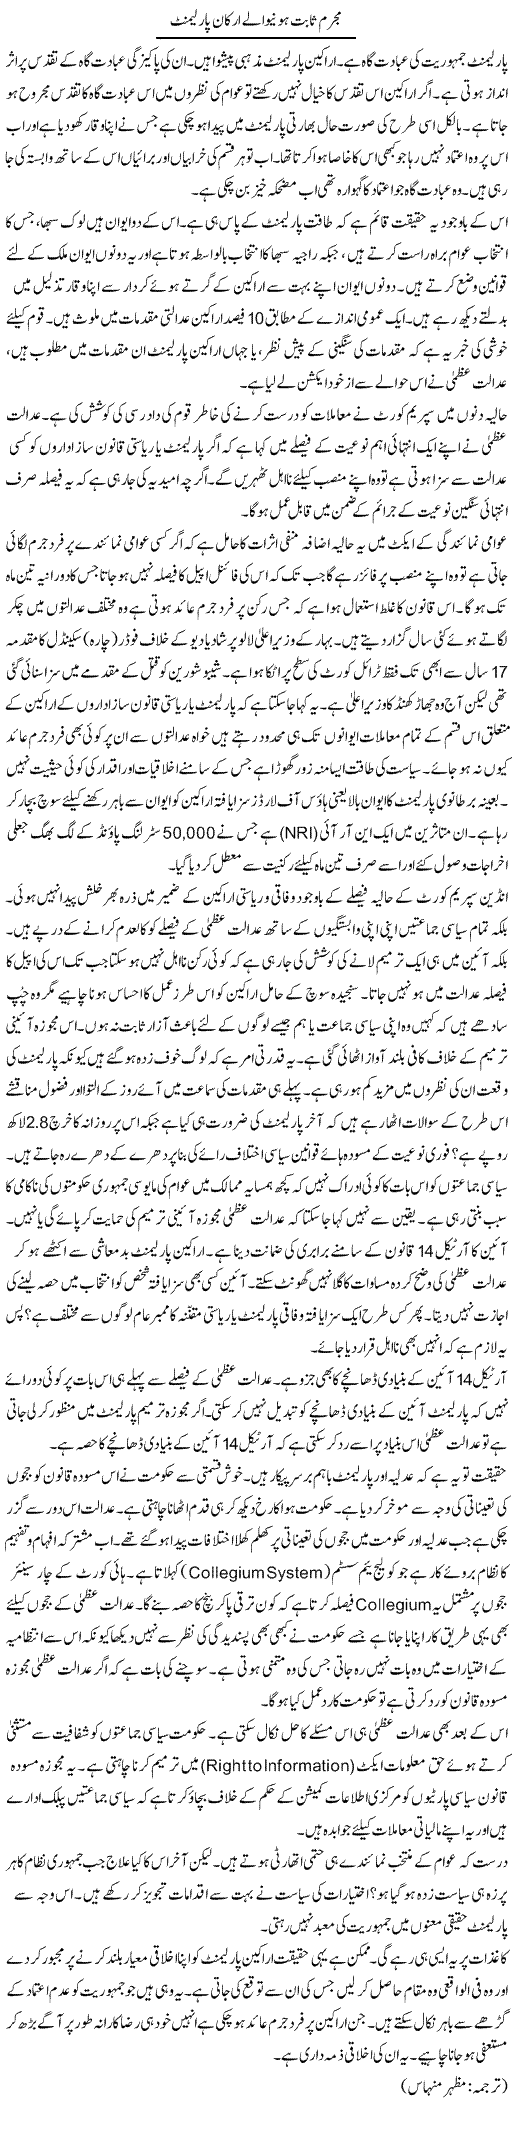 Mujrim Sabit Hone Waly Arkan Parliment | Kuldip Nayar | Daily Urdu Columns